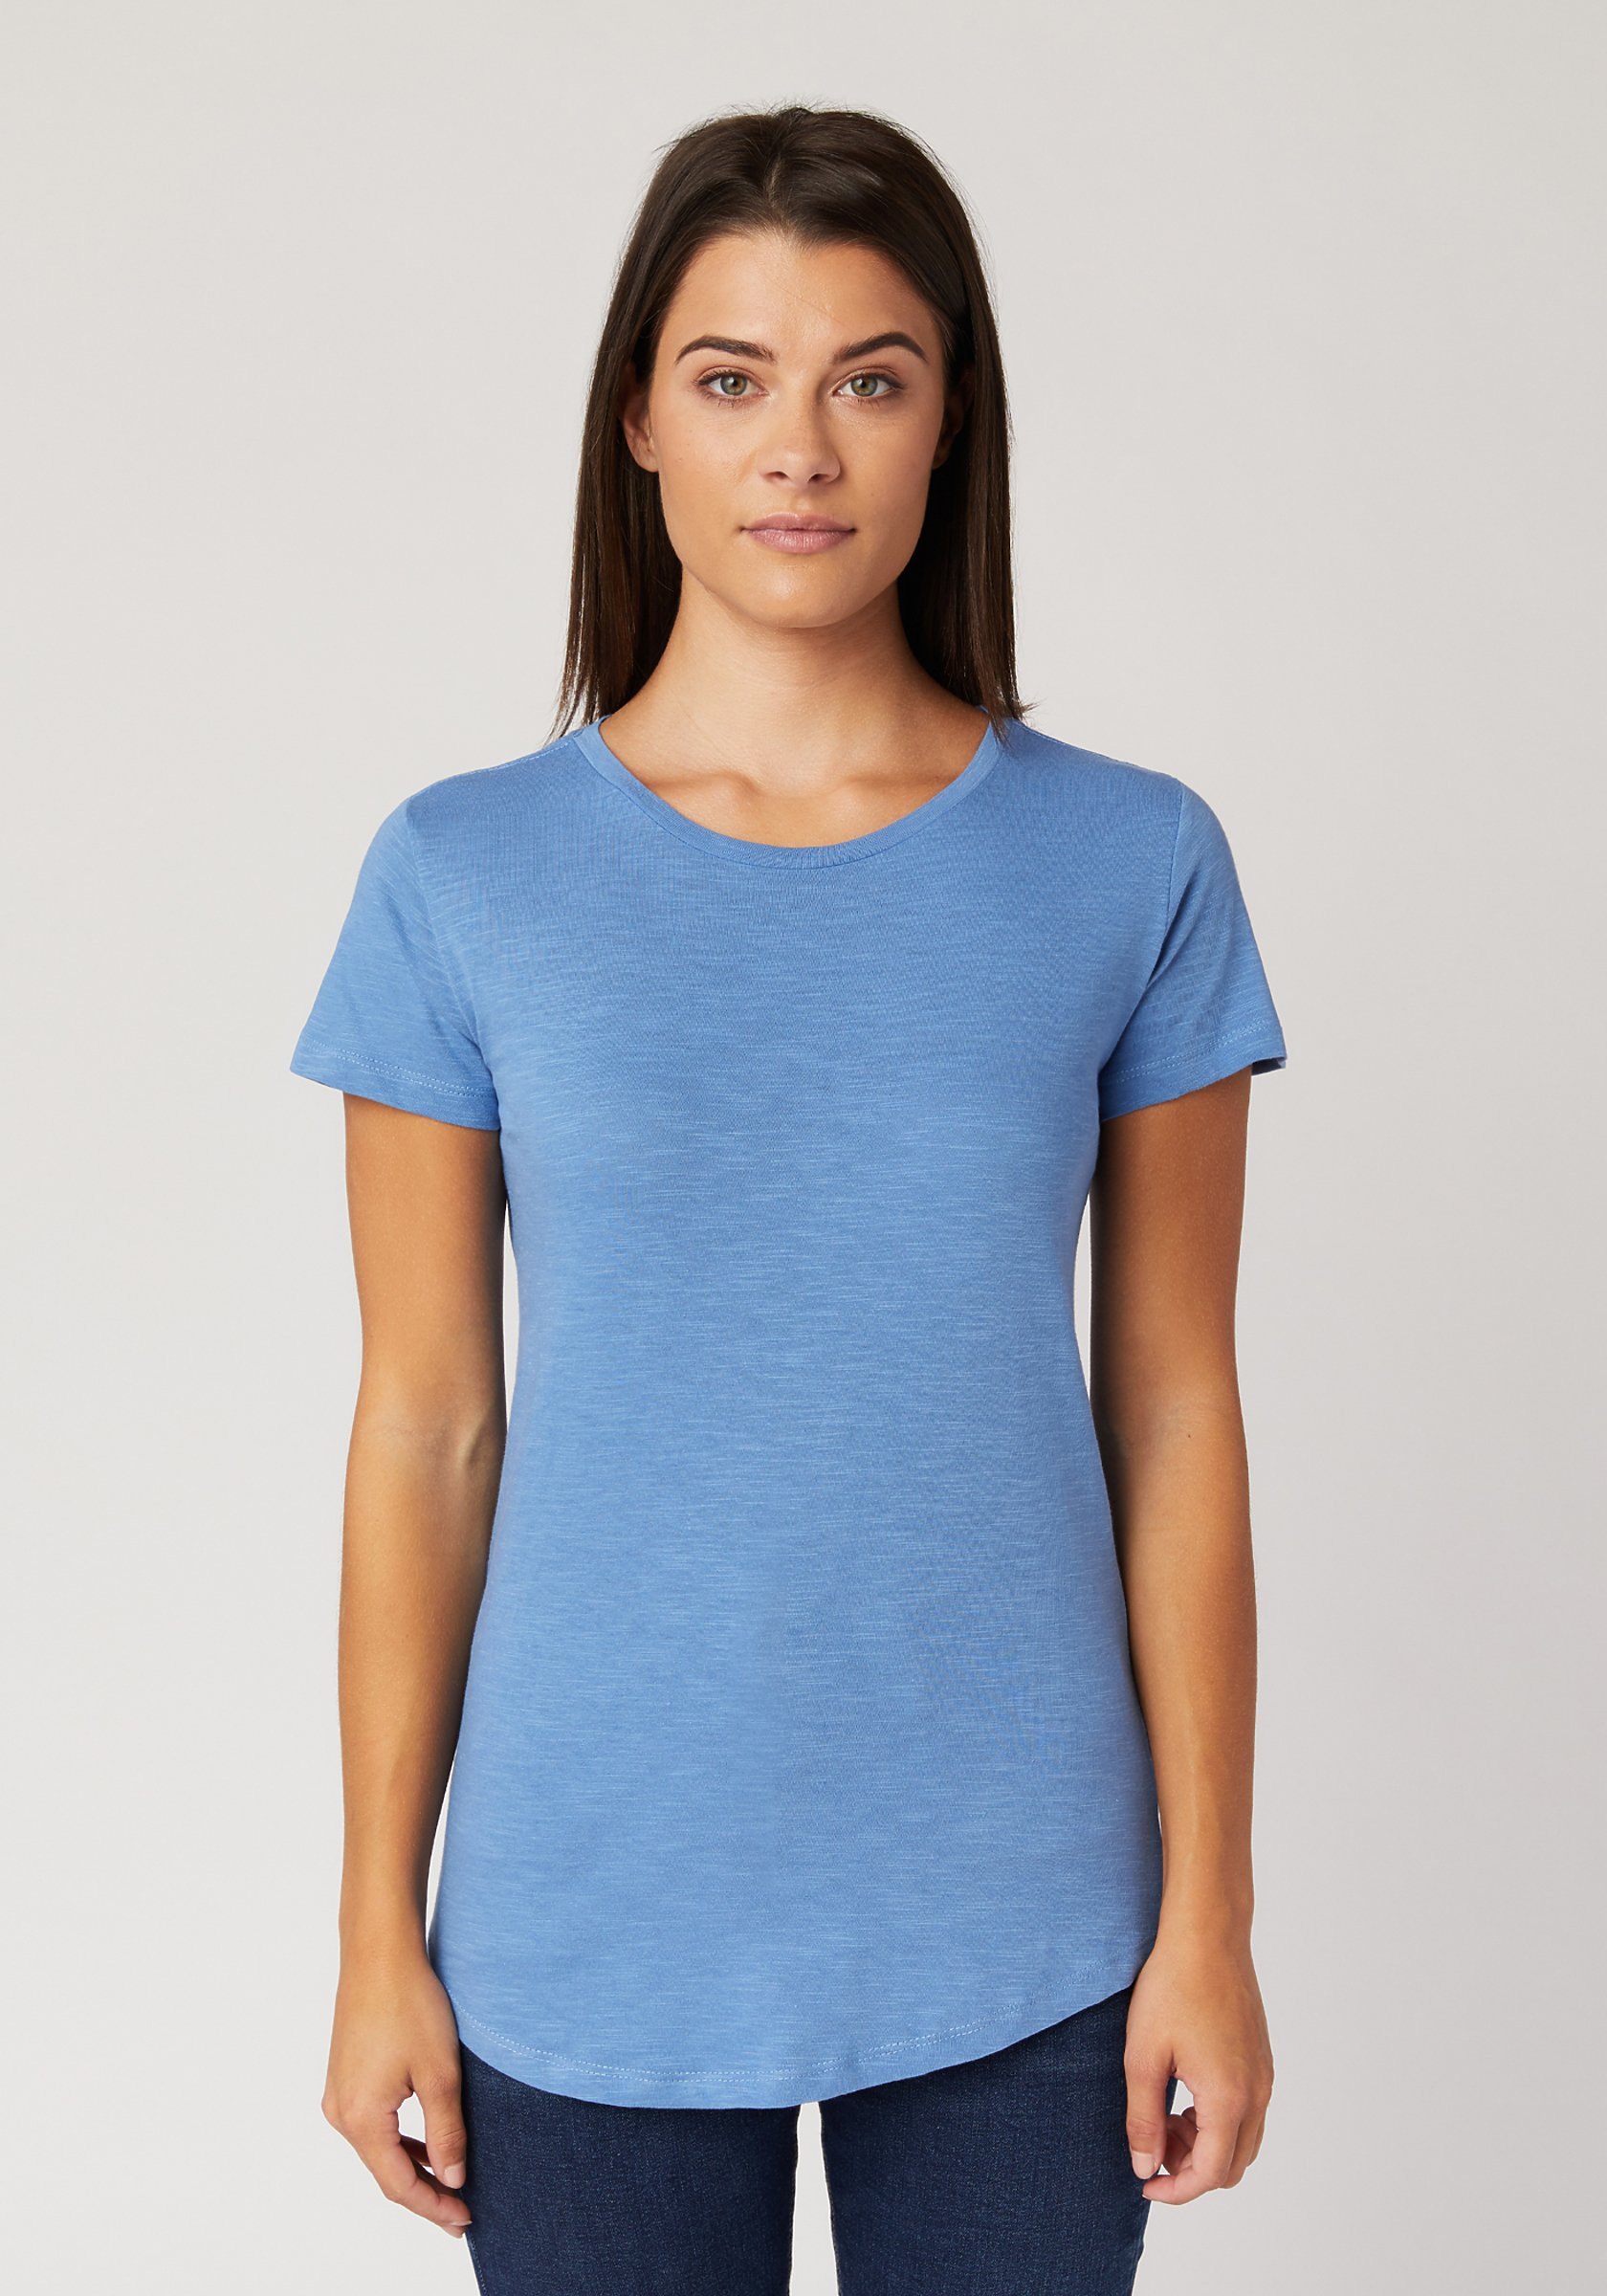 Girl Shirt - Monogram Tee with Sailboats on Light Blue Shirt